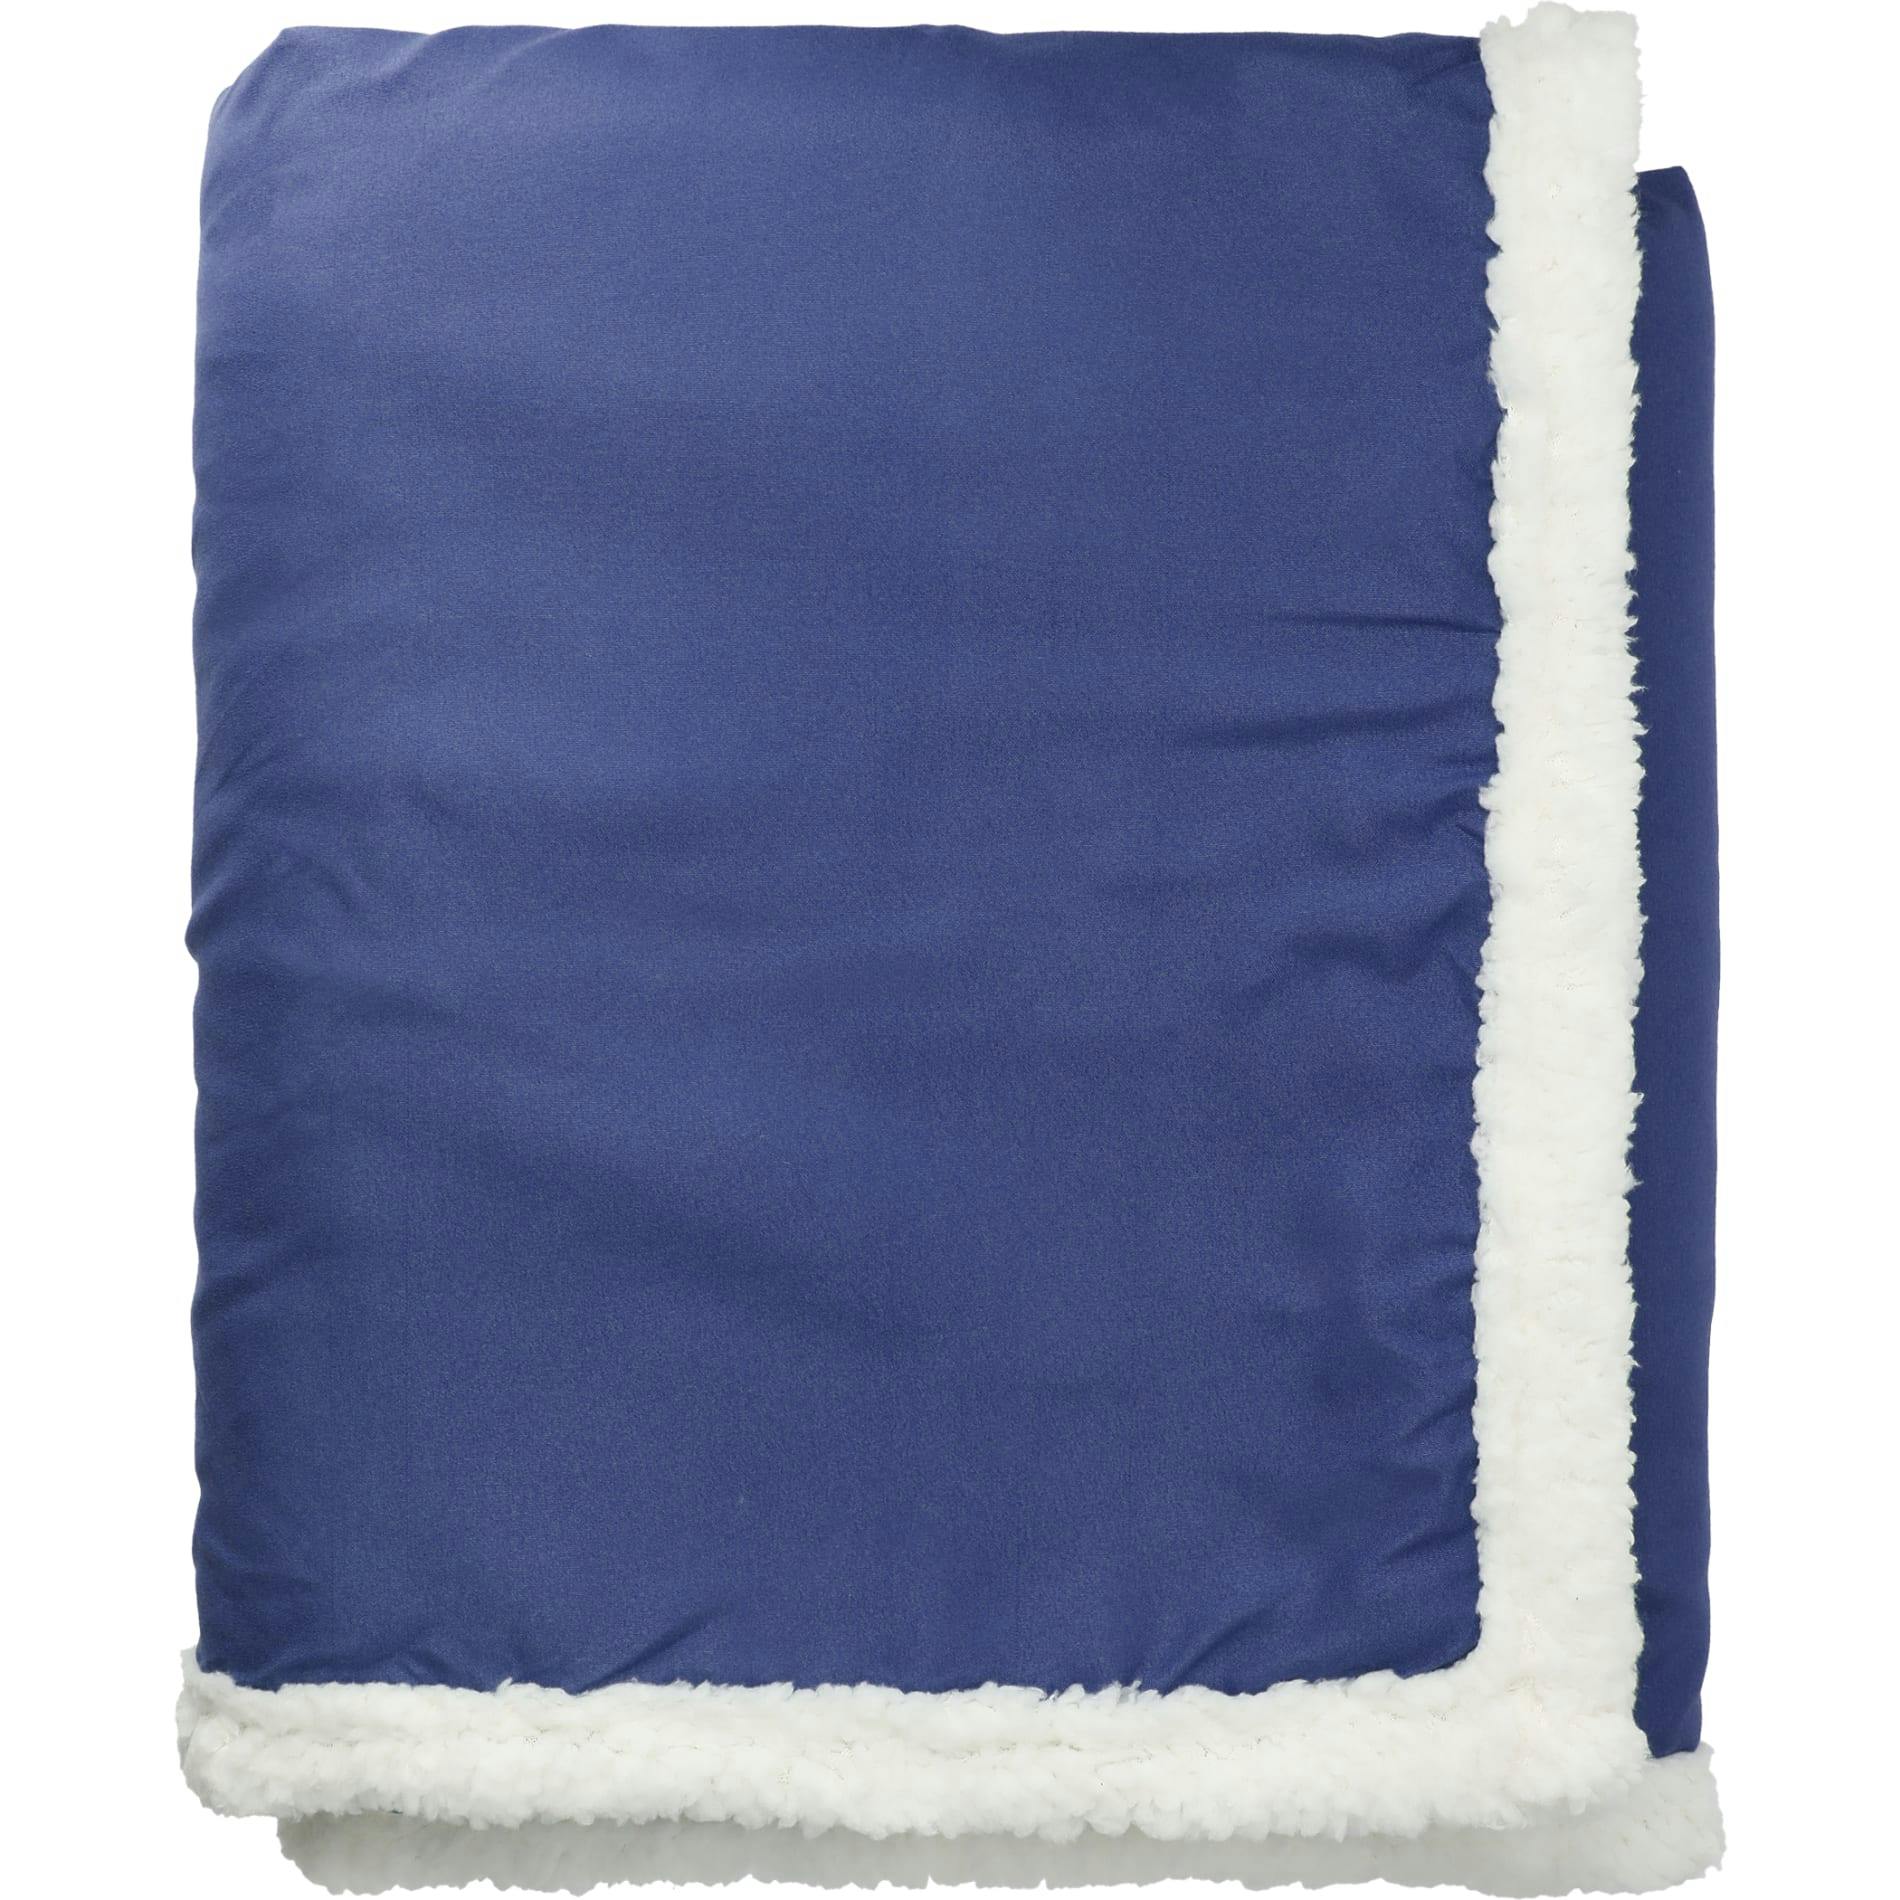 Sherpa Blanket - additional Image 5